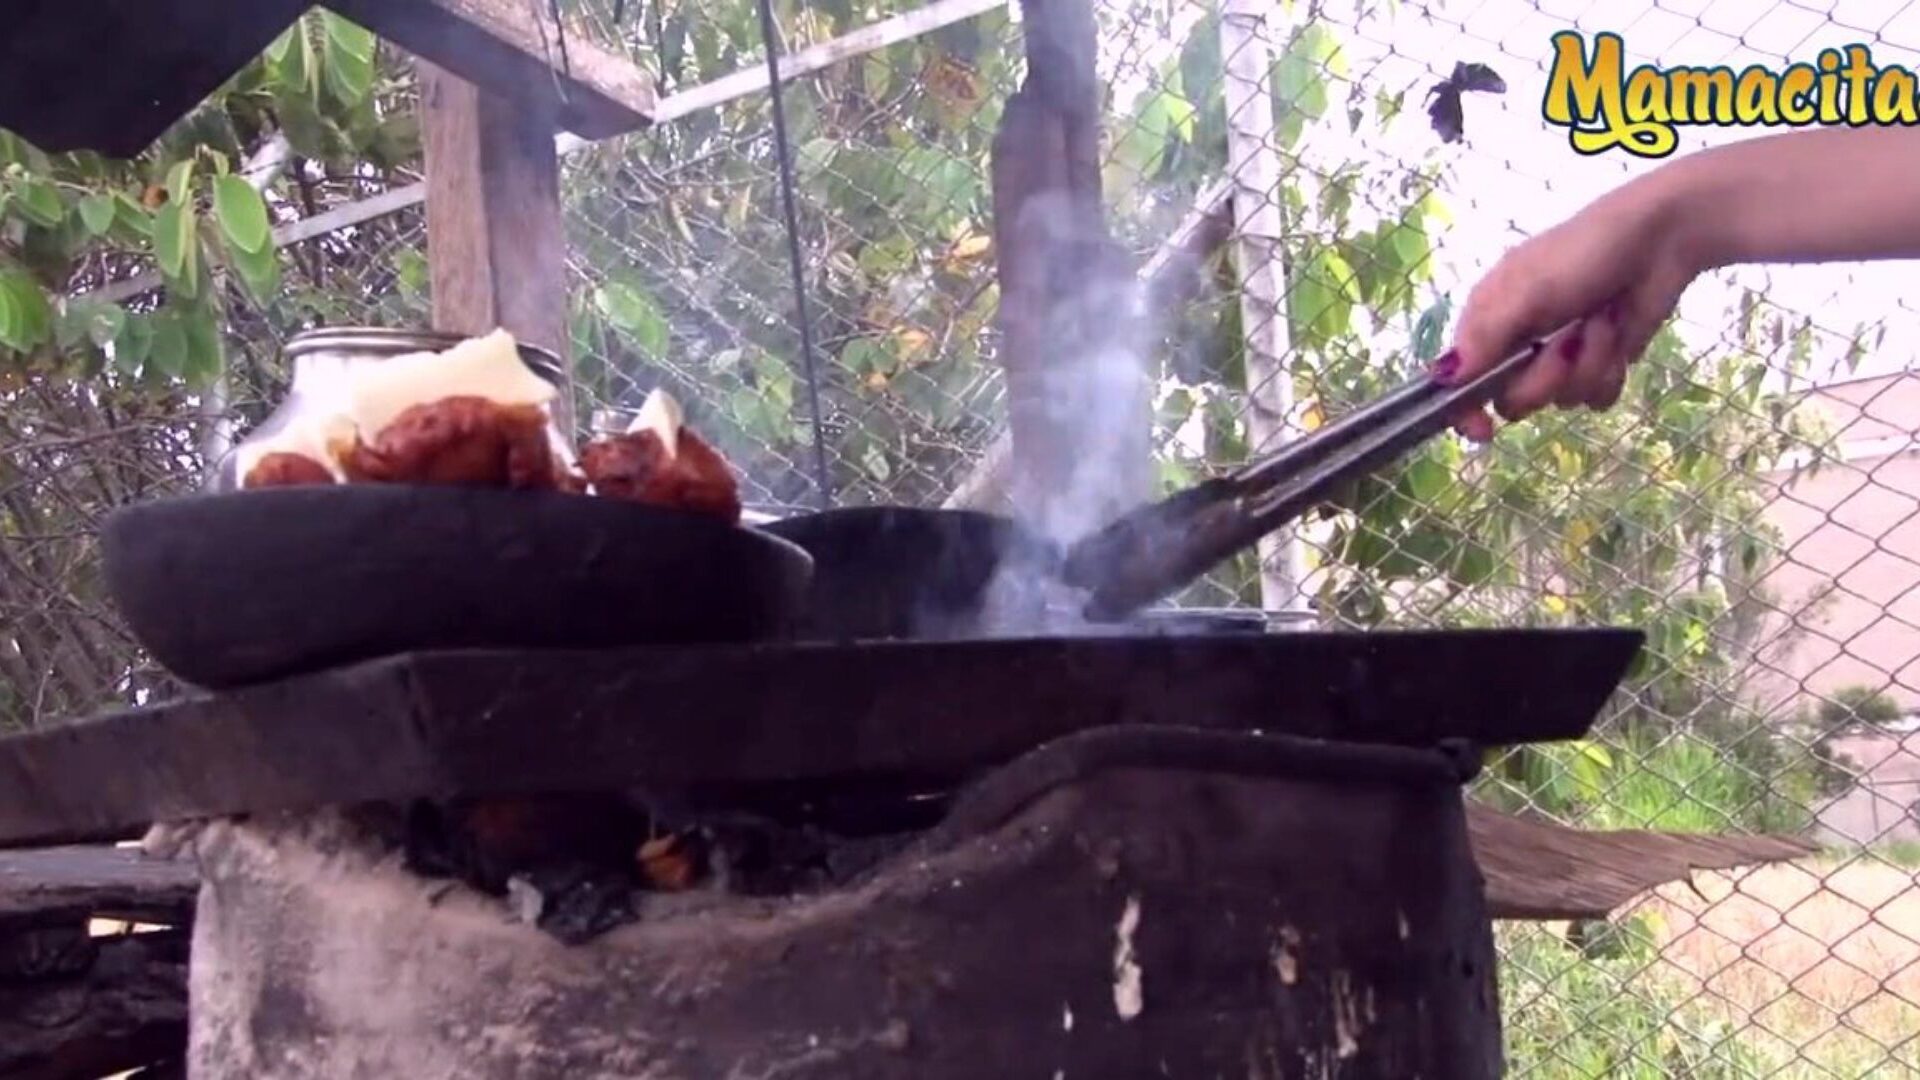 mamacitaz - ο σούπερ καυτός κολομβιανός πωλητής κρέατος λαχταρά έναν διαφορετικό τύπο κρέατος